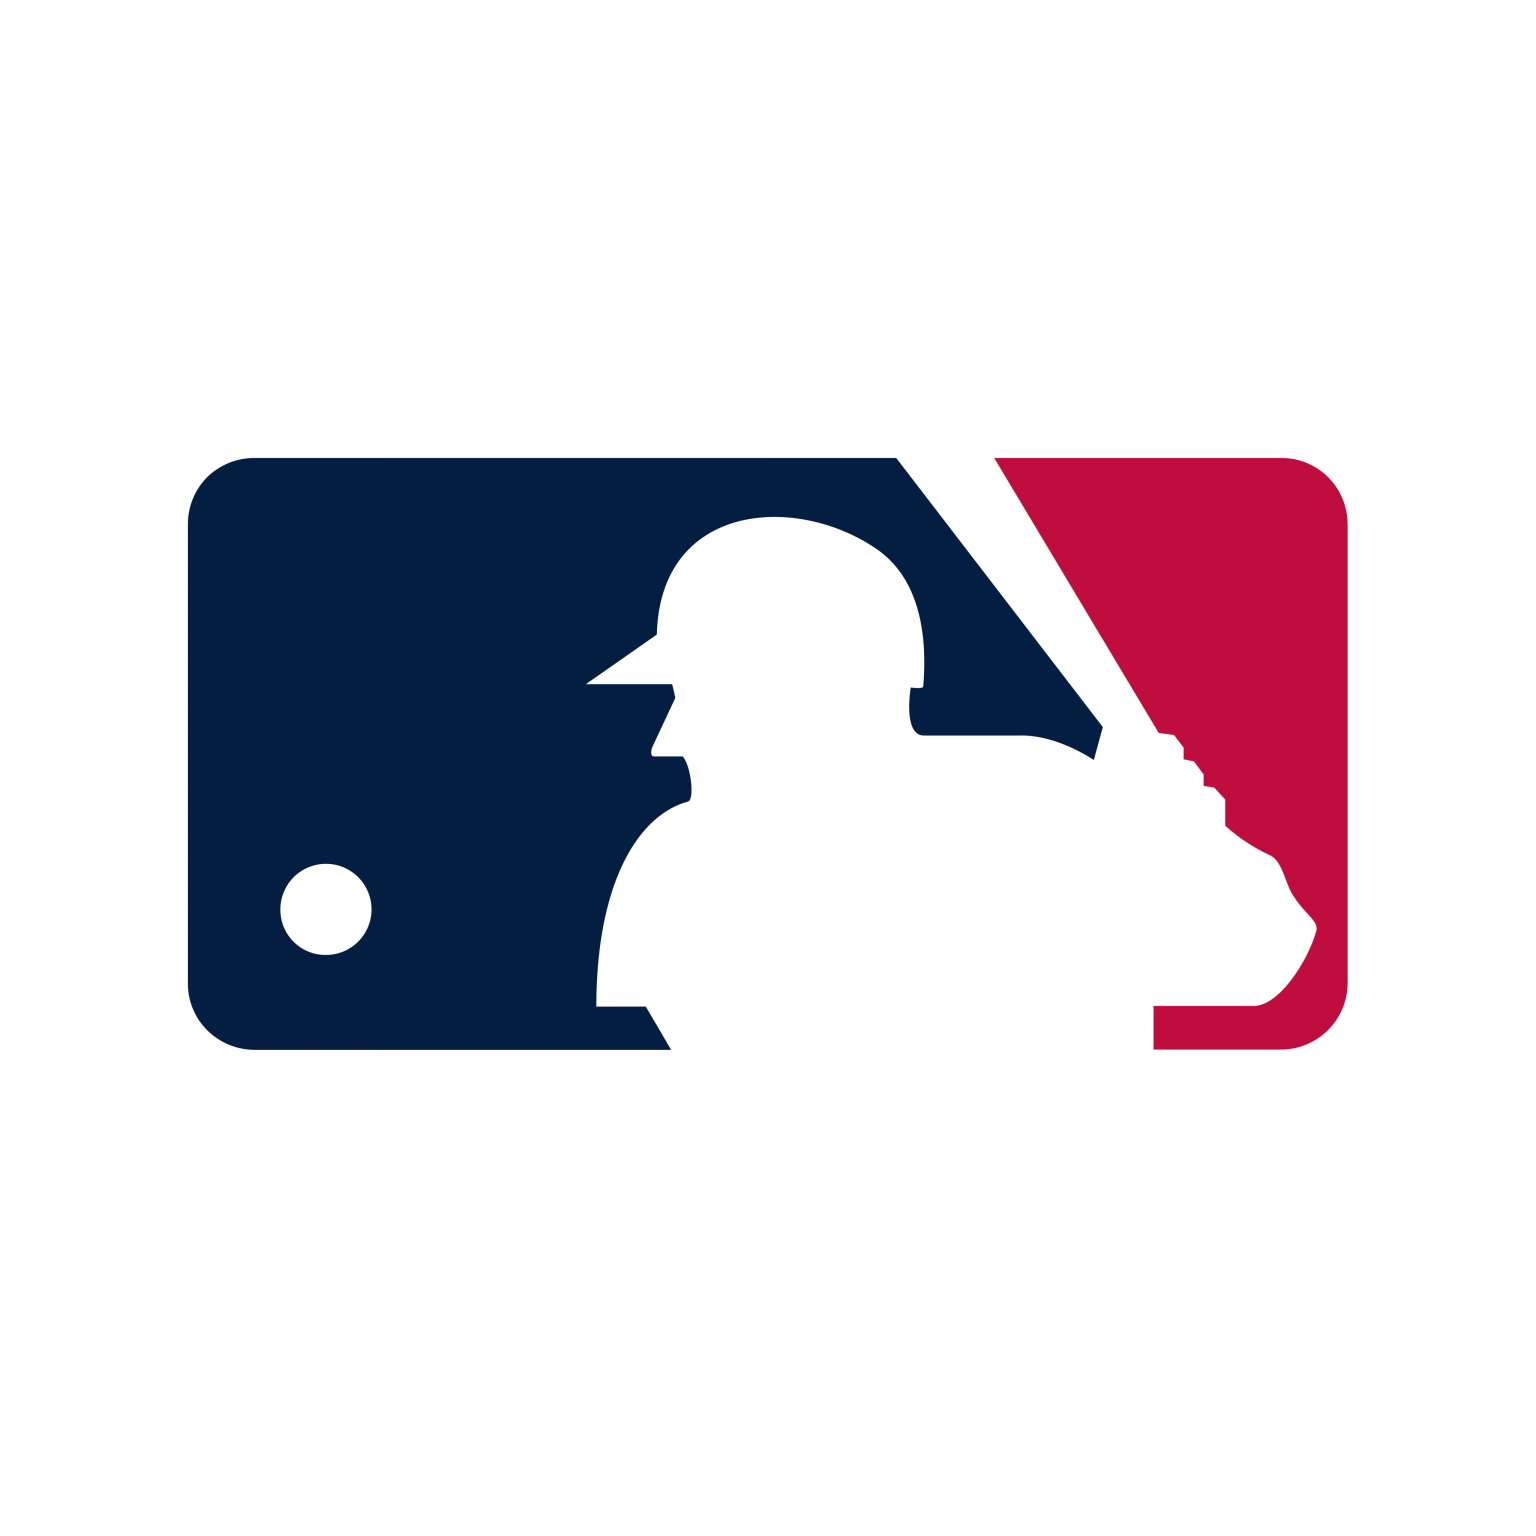 Mlb Logo Major League Baseball Logo Png E Vetor Download De Logo